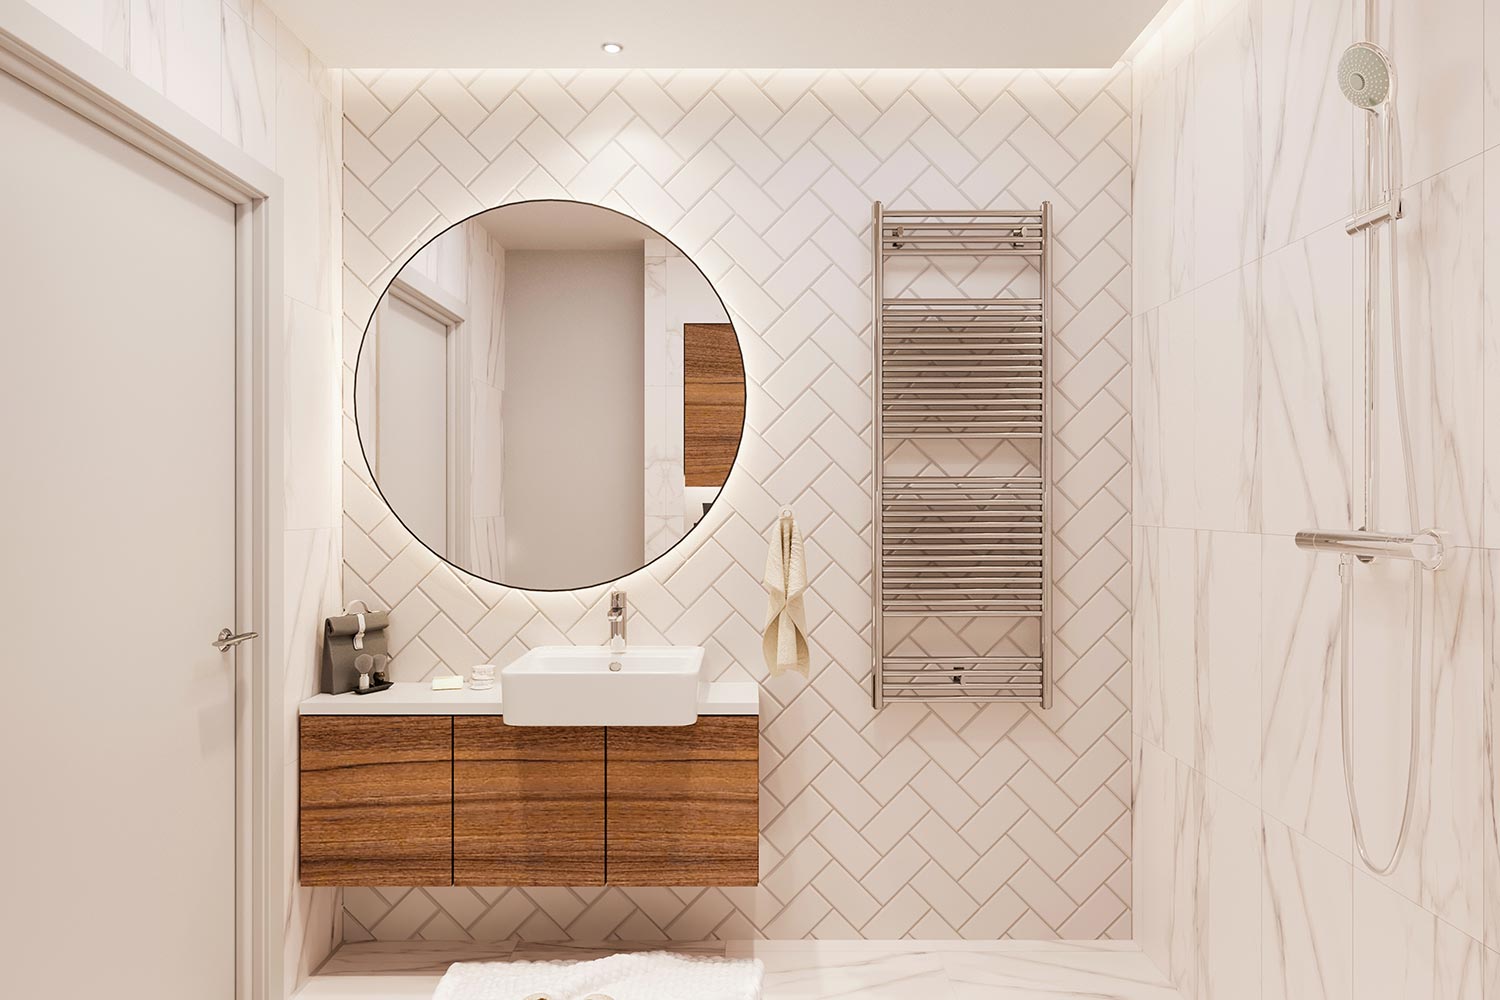 Luxurious bathroom interior render